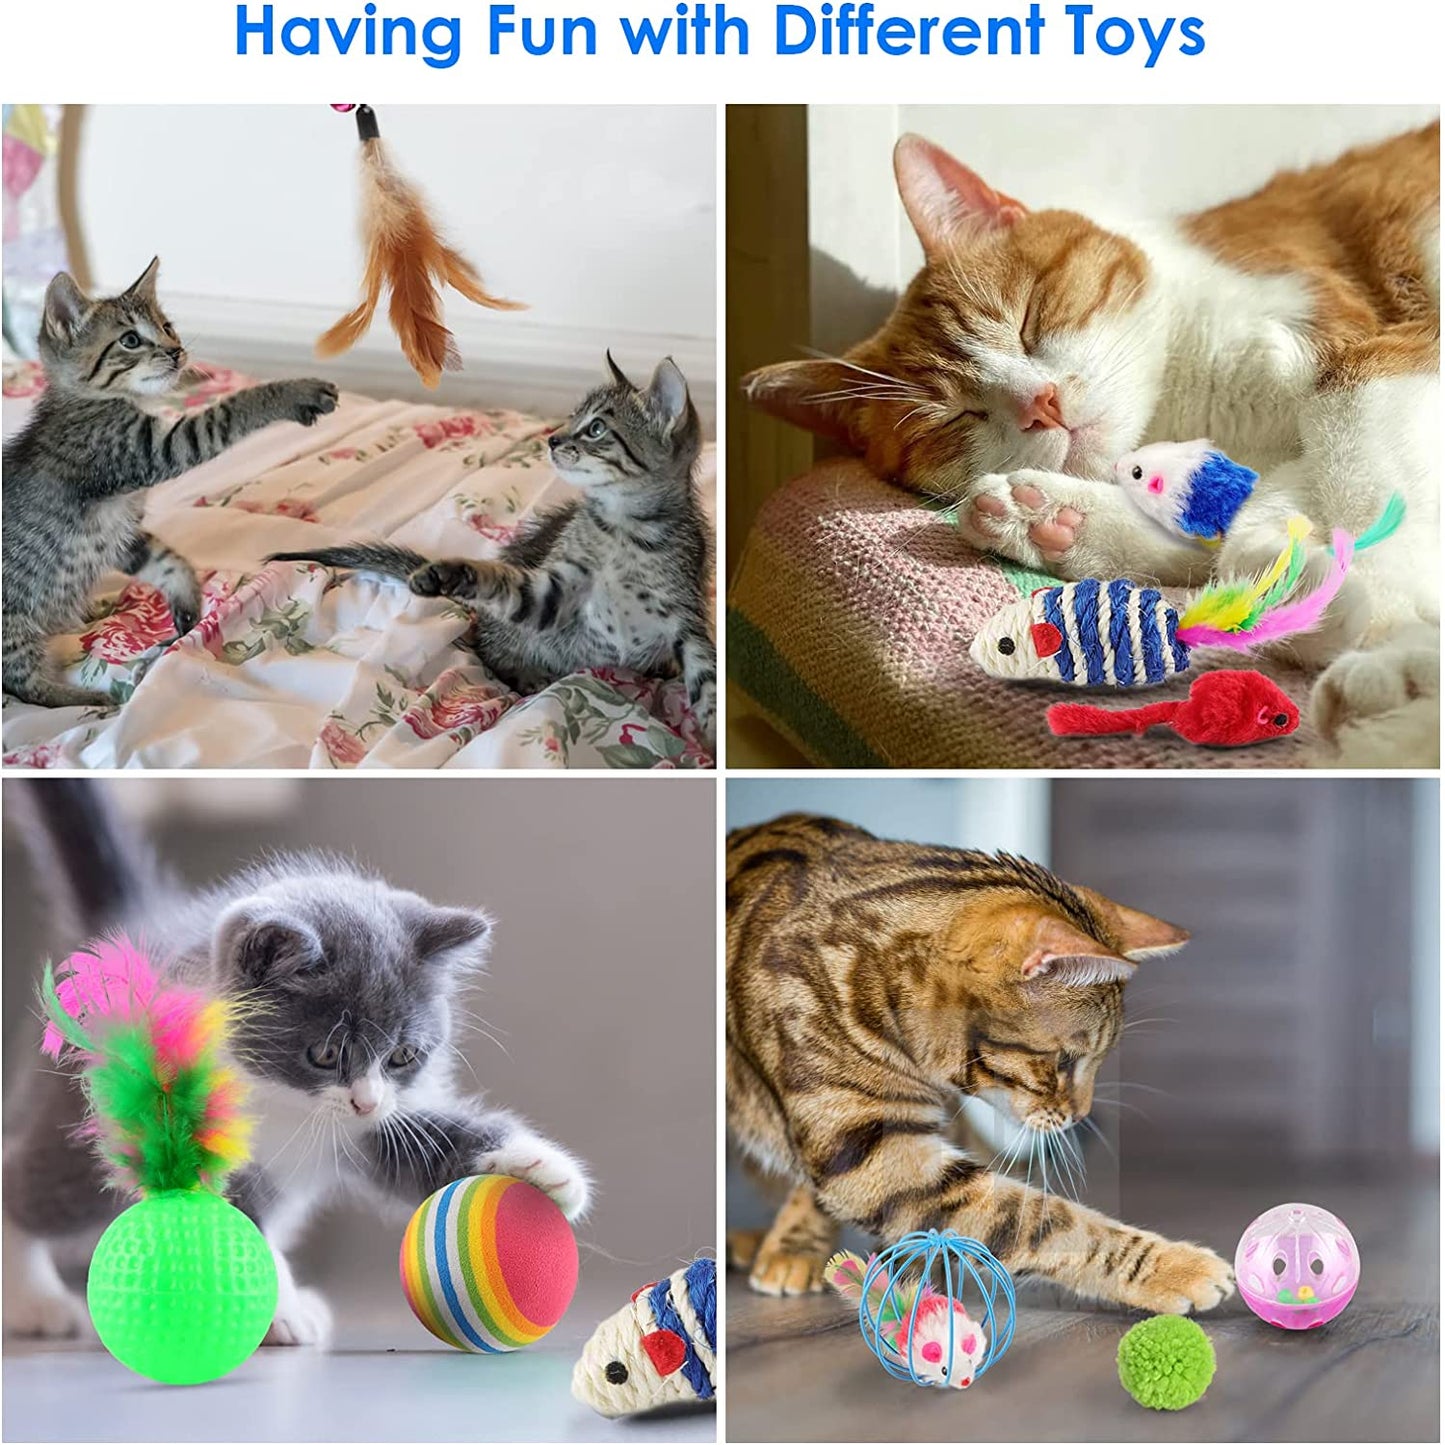 32PCS  Cat Feather Toys